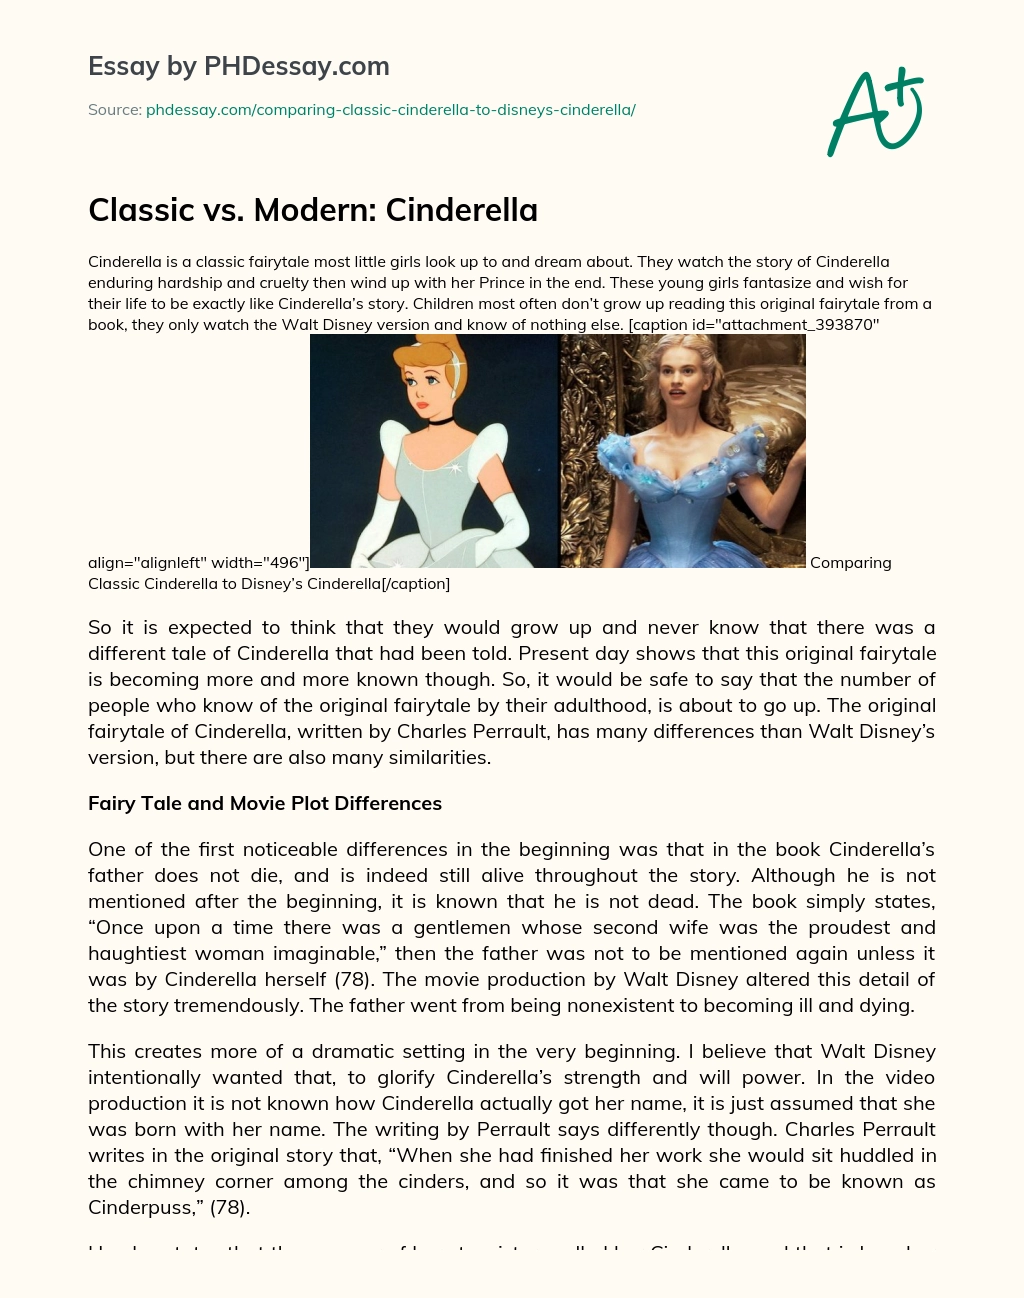 Classic vs. Modern: Cinderella essay